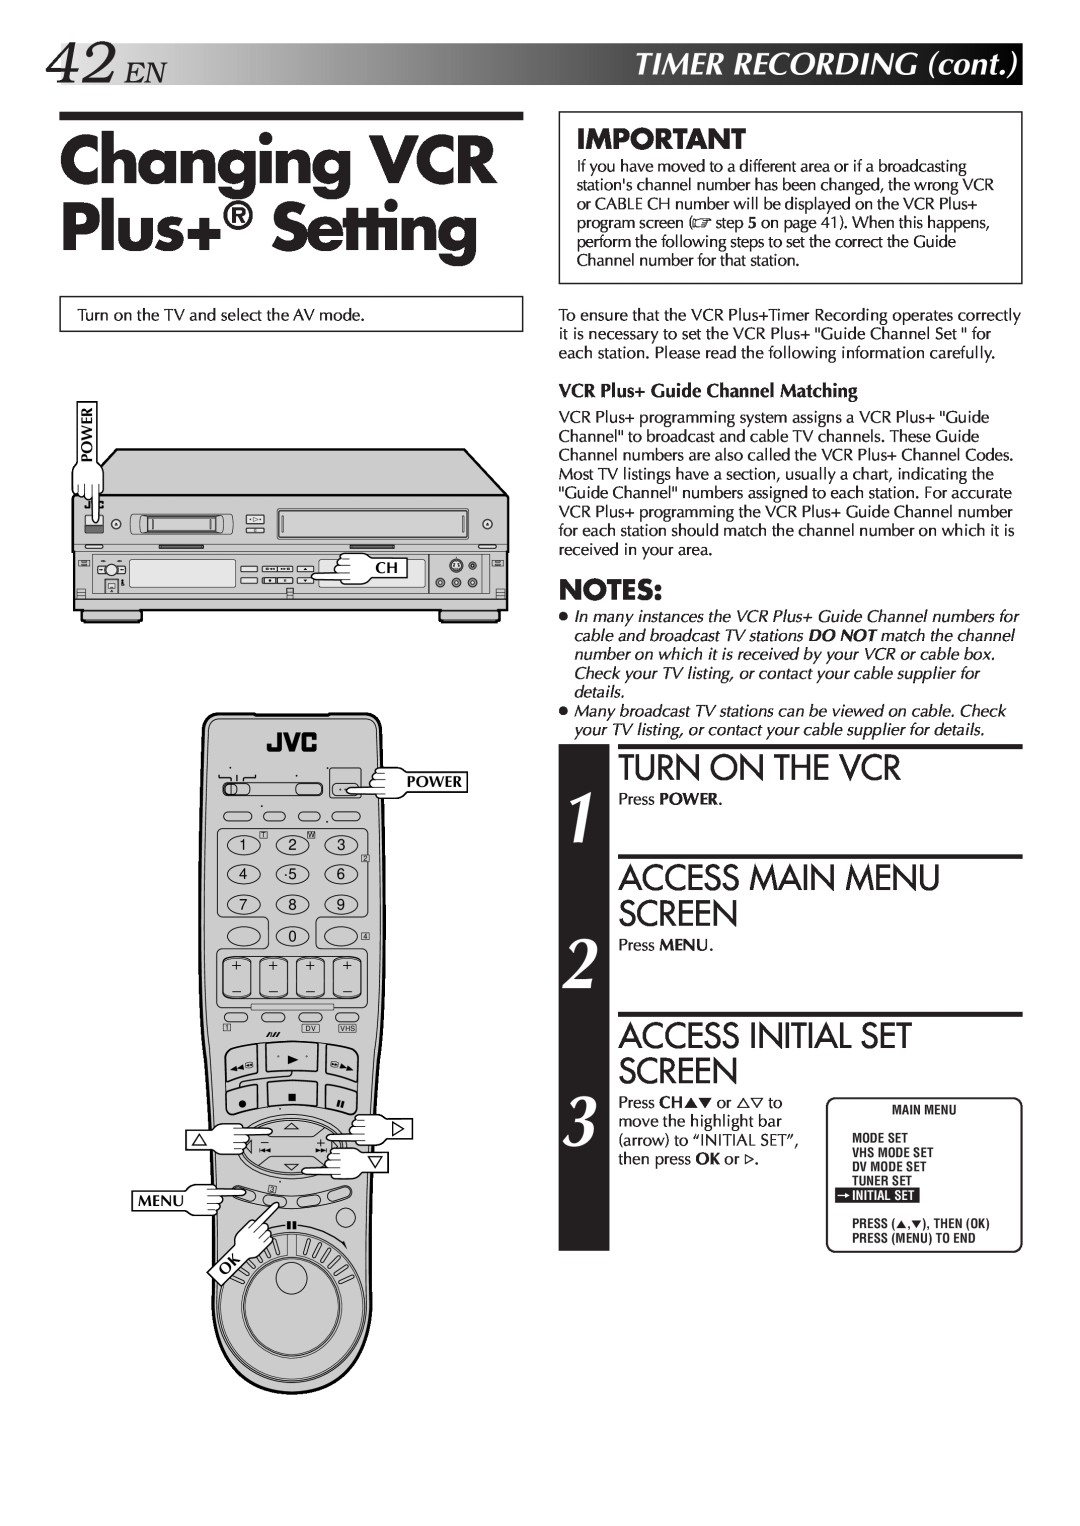 JVC Model HR-DVS1U manual Changing VCR Plus+ Setting, 42ENTIMERRECORDINGcont, Turn On The Vcr, Access Main Menu, Screen 